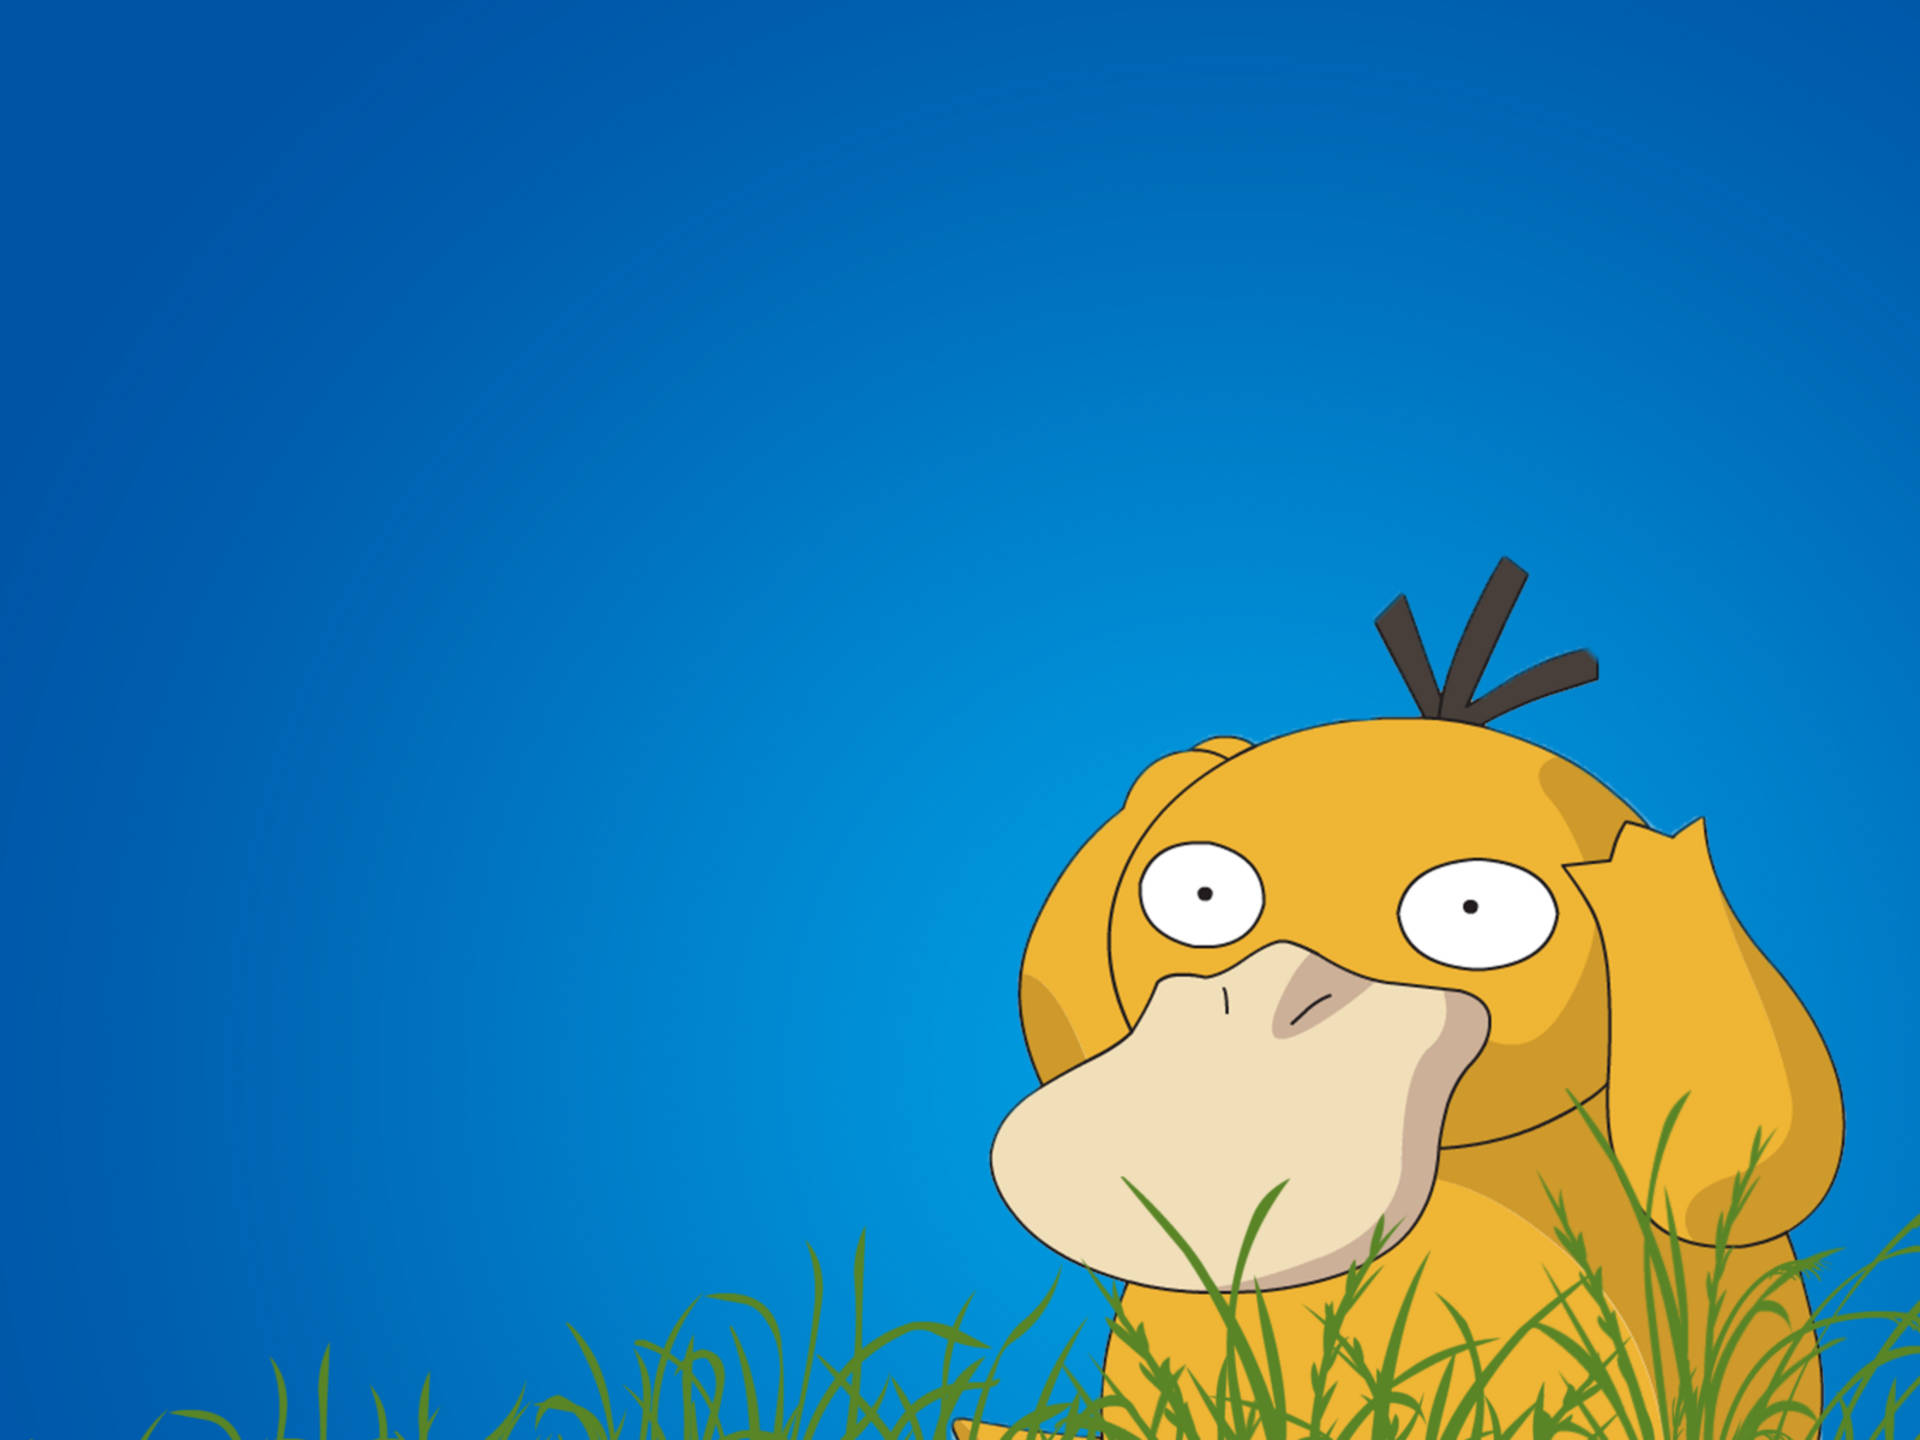 Psyduck - The Yellow Pokemon Background